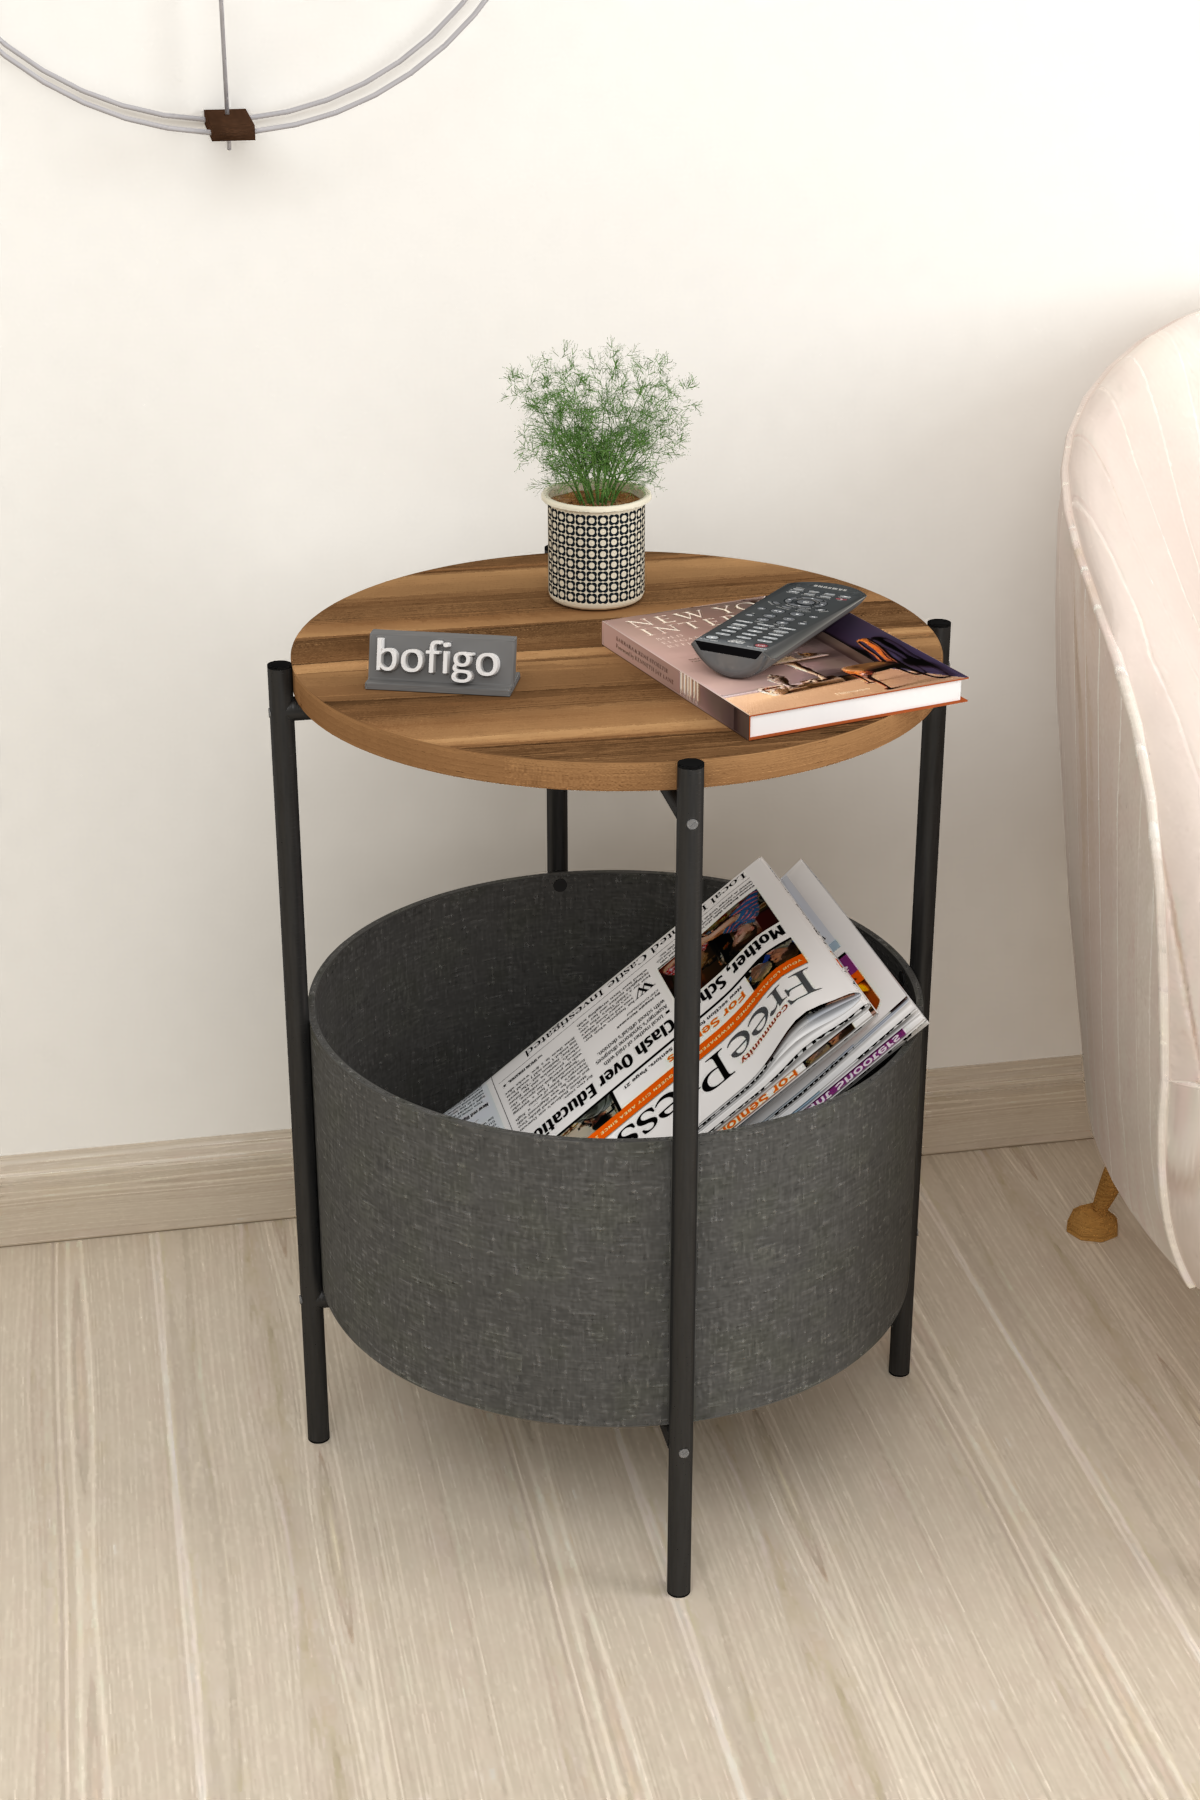 Bofigo Coffee Table with Bag Newspaper Holder Bookshelf  Flowerpot Walnut